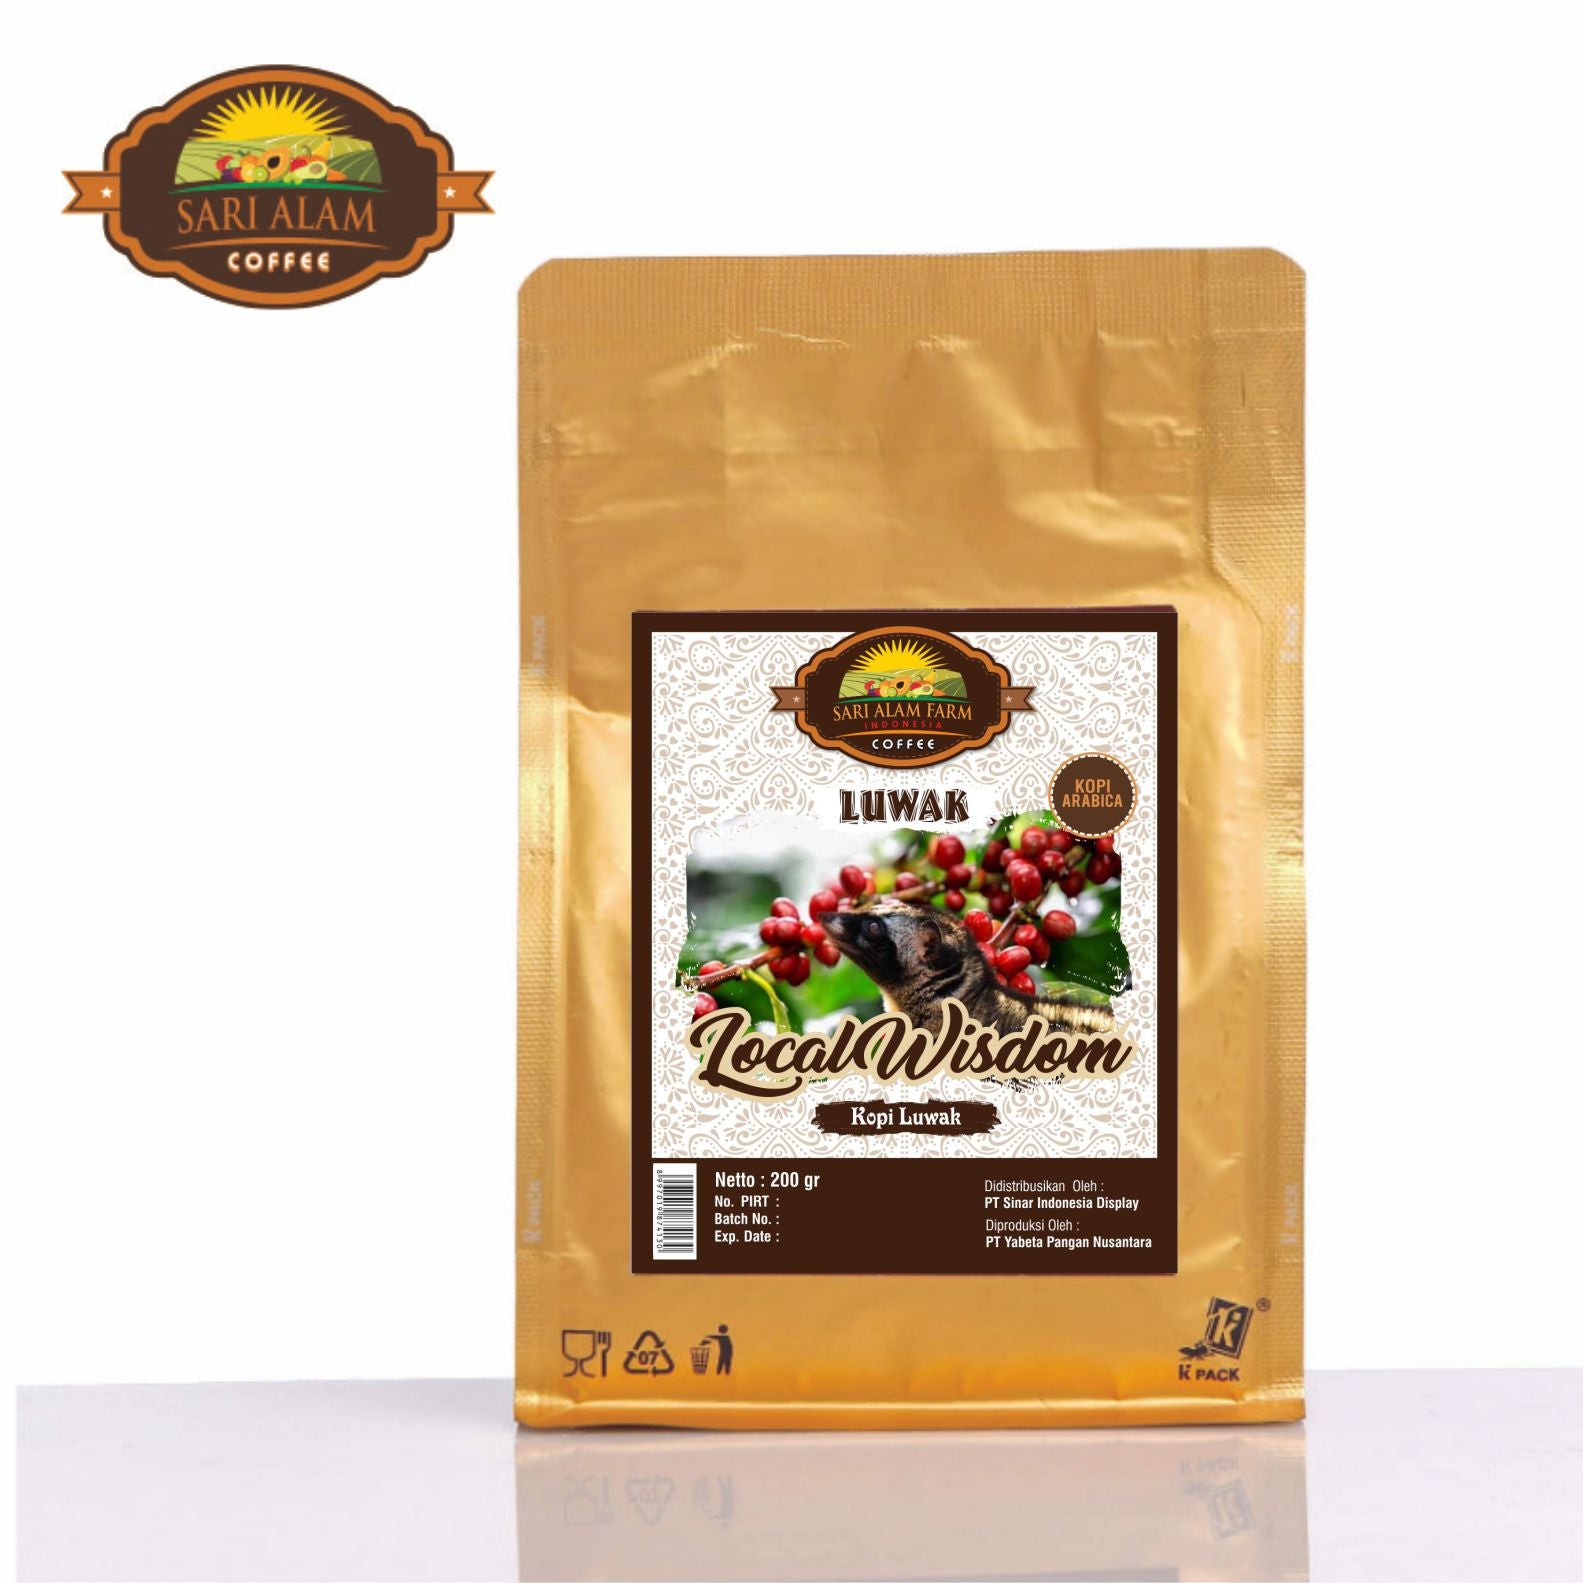 PREMIUM GROUND POWDER KOPI LUWAK ARABICA COFFEE FROM INDONESIA - 200 GRAM (7 OZ)